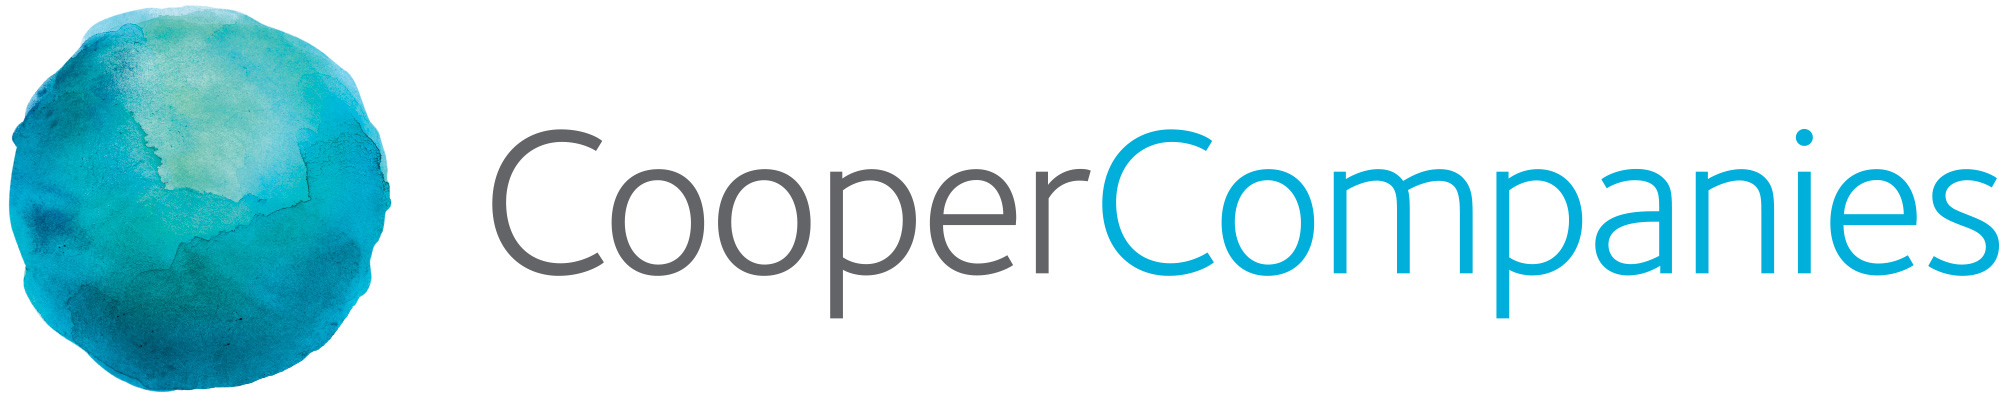 CooperCompanies-Aqua-Logo-HORZ.jpg